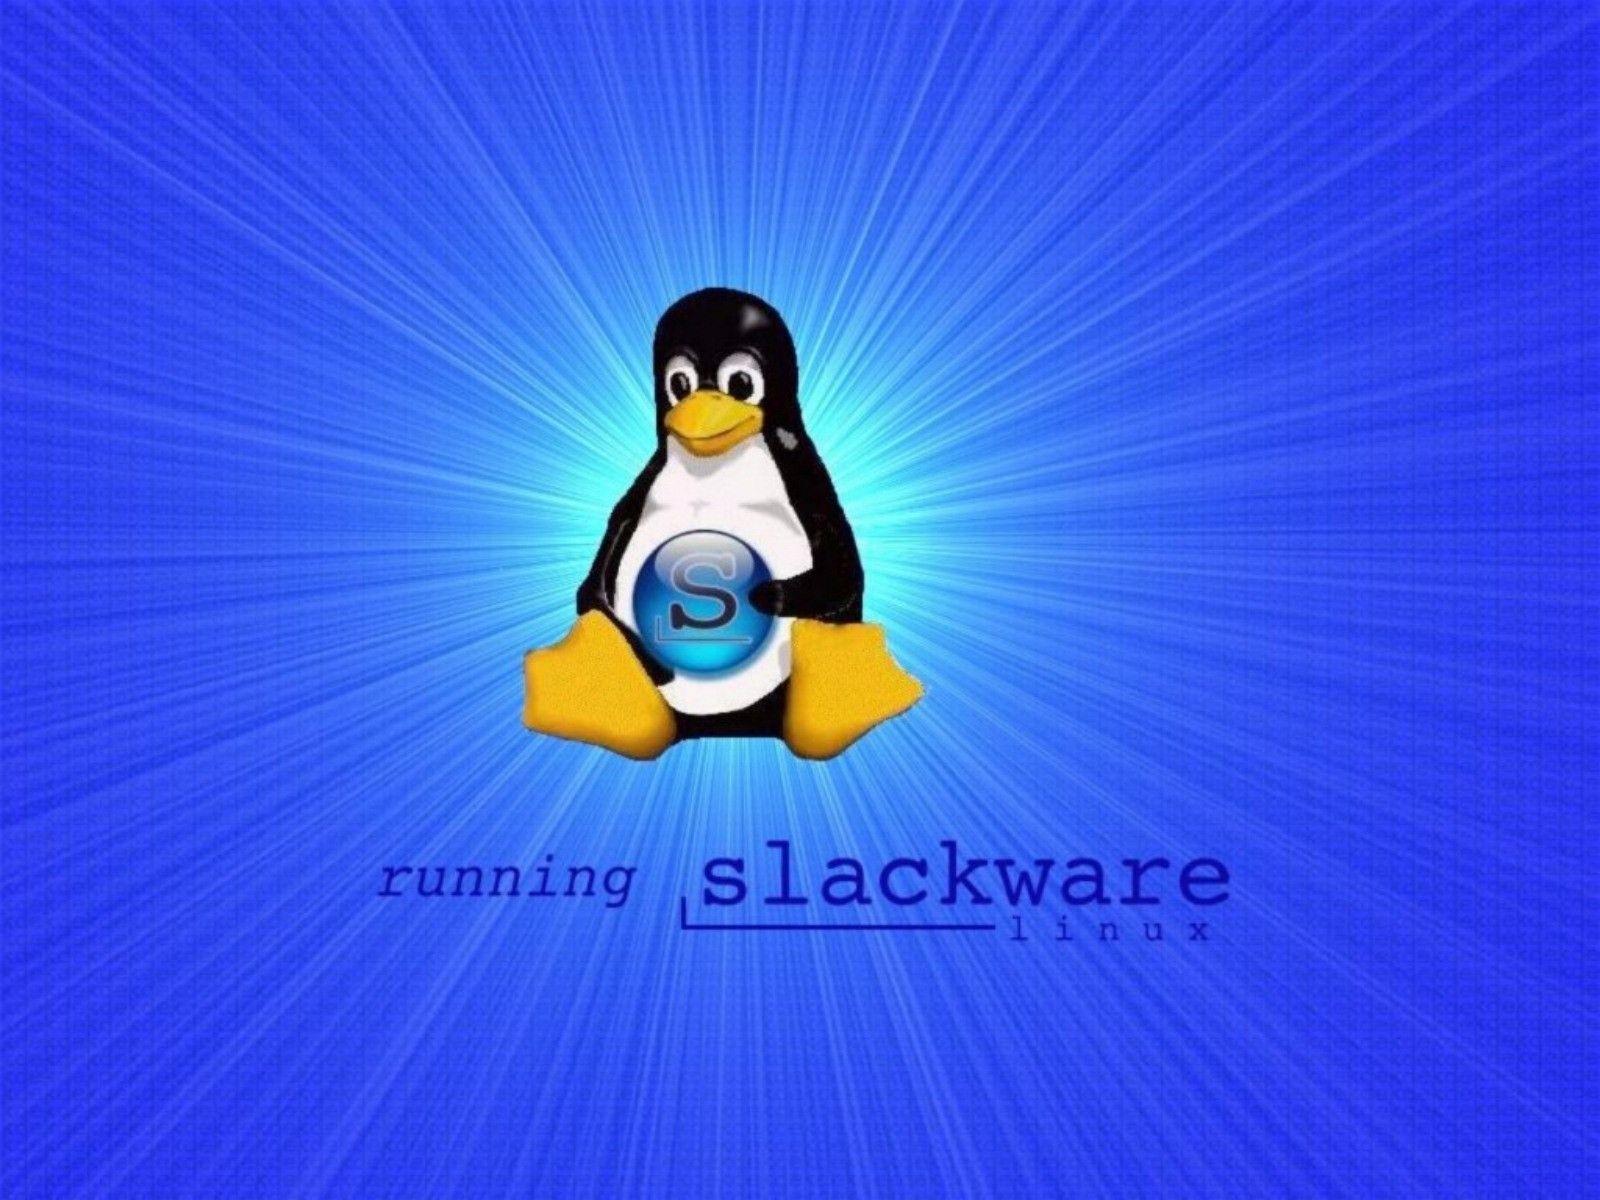 Slackware Blue Linux Wallpaper Computers Running Slack Linux